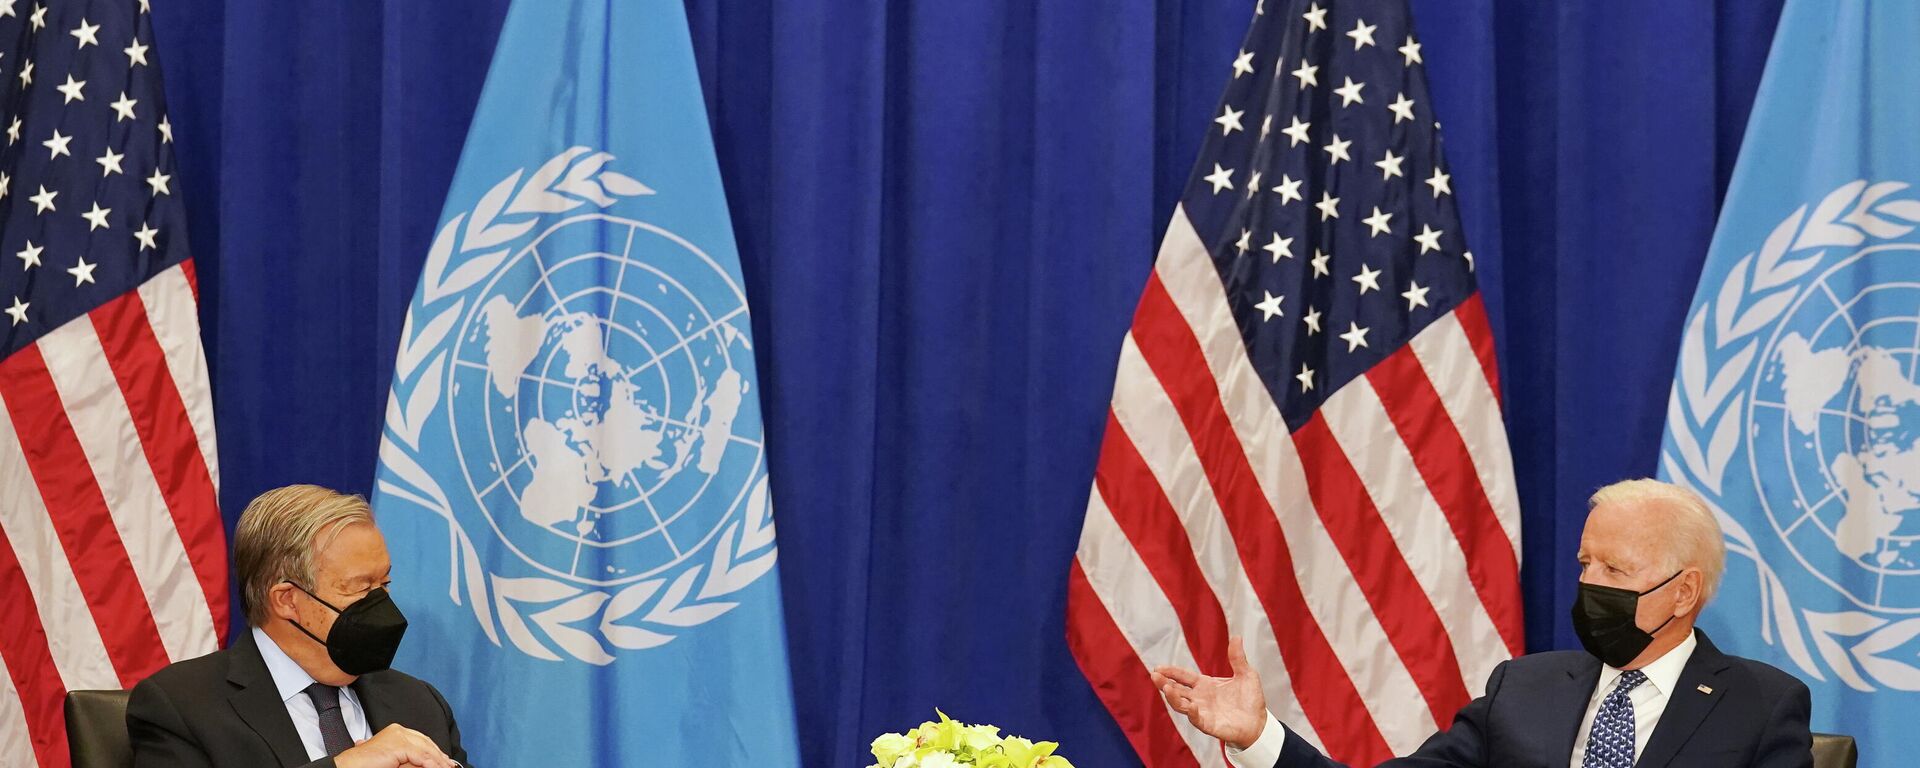 U.S. President Joe Biden meets with United Nations Secretary-General Antonio Guterres at the 76th Session of the U.N. General Assembly in New York City, U.S., September 20, 2021 - Sputnik International, 1920, 21.09.2021